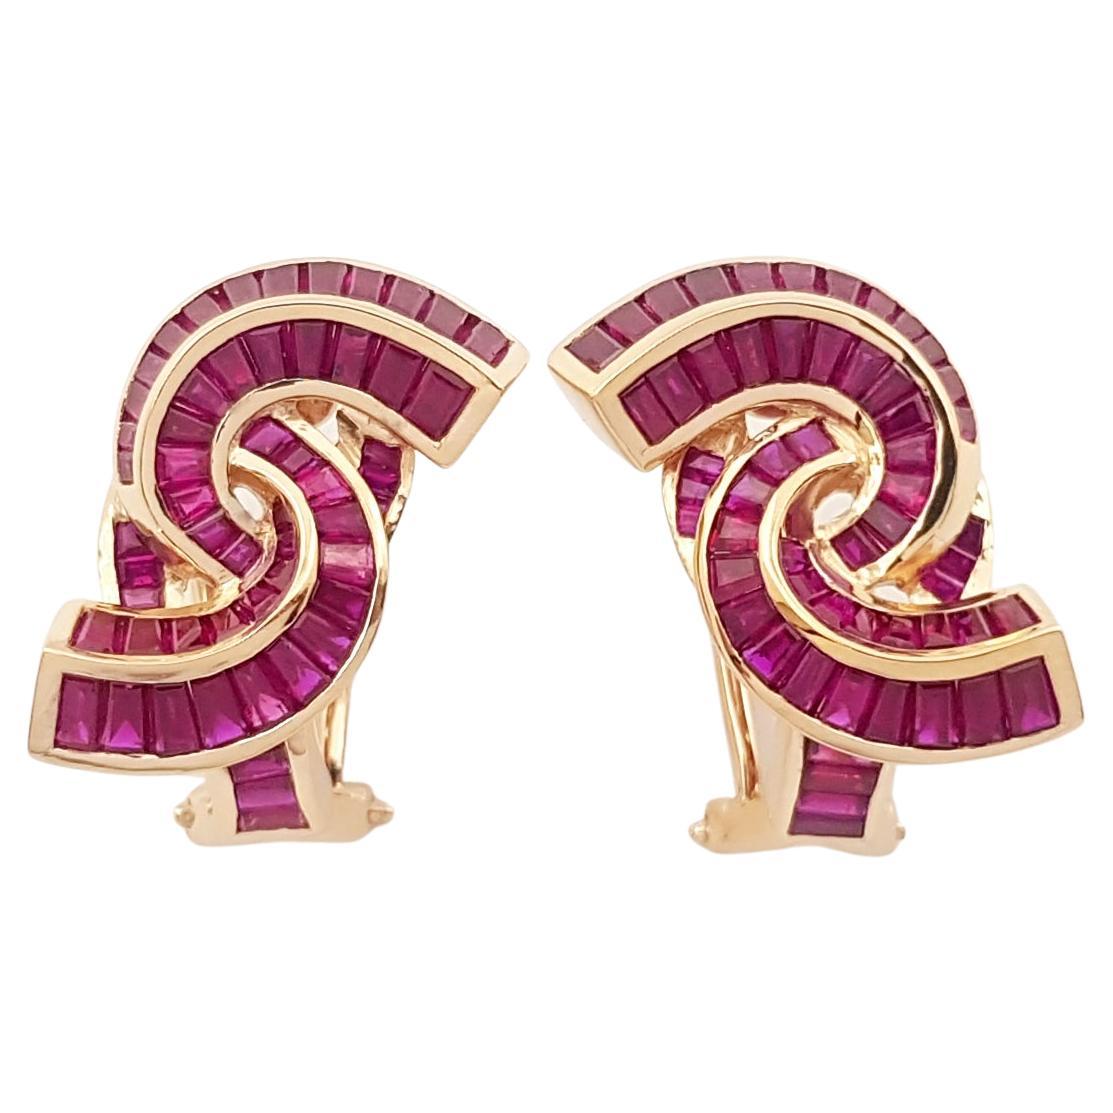 Ruby Earrings set in 18K Rose Gold Settings